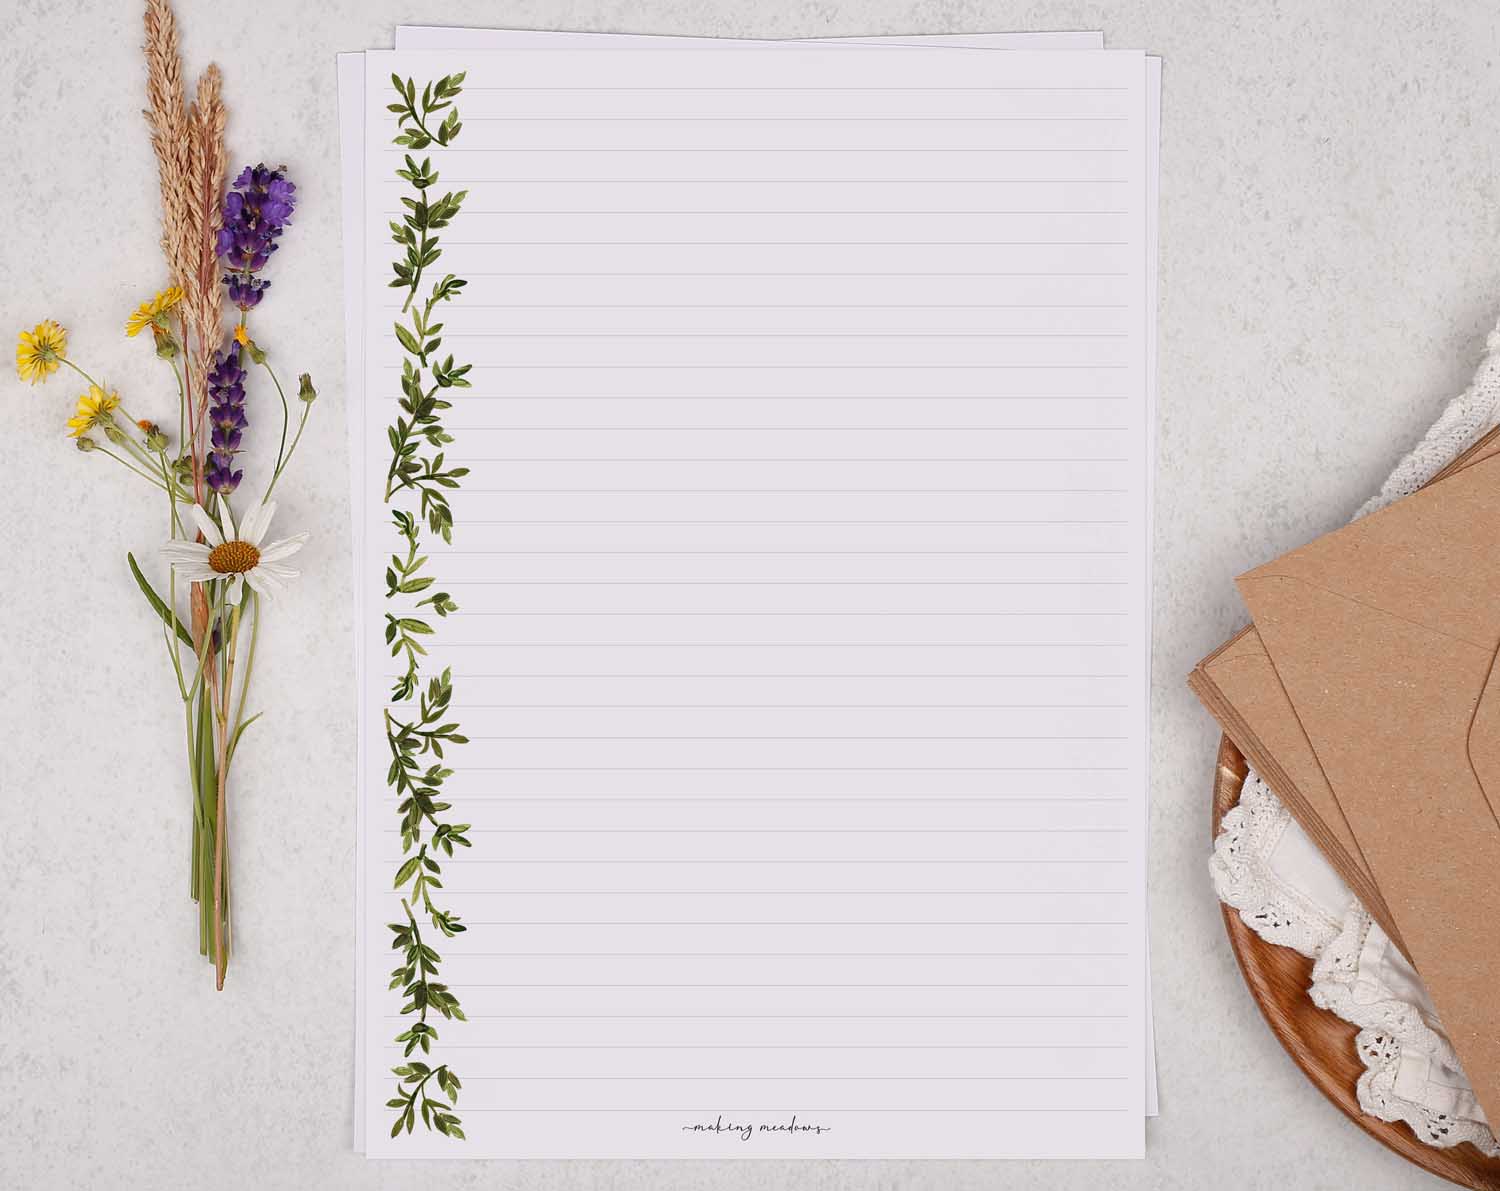 Elegant A5 Writing Paper Sheets with Botanics & Ferns - Making